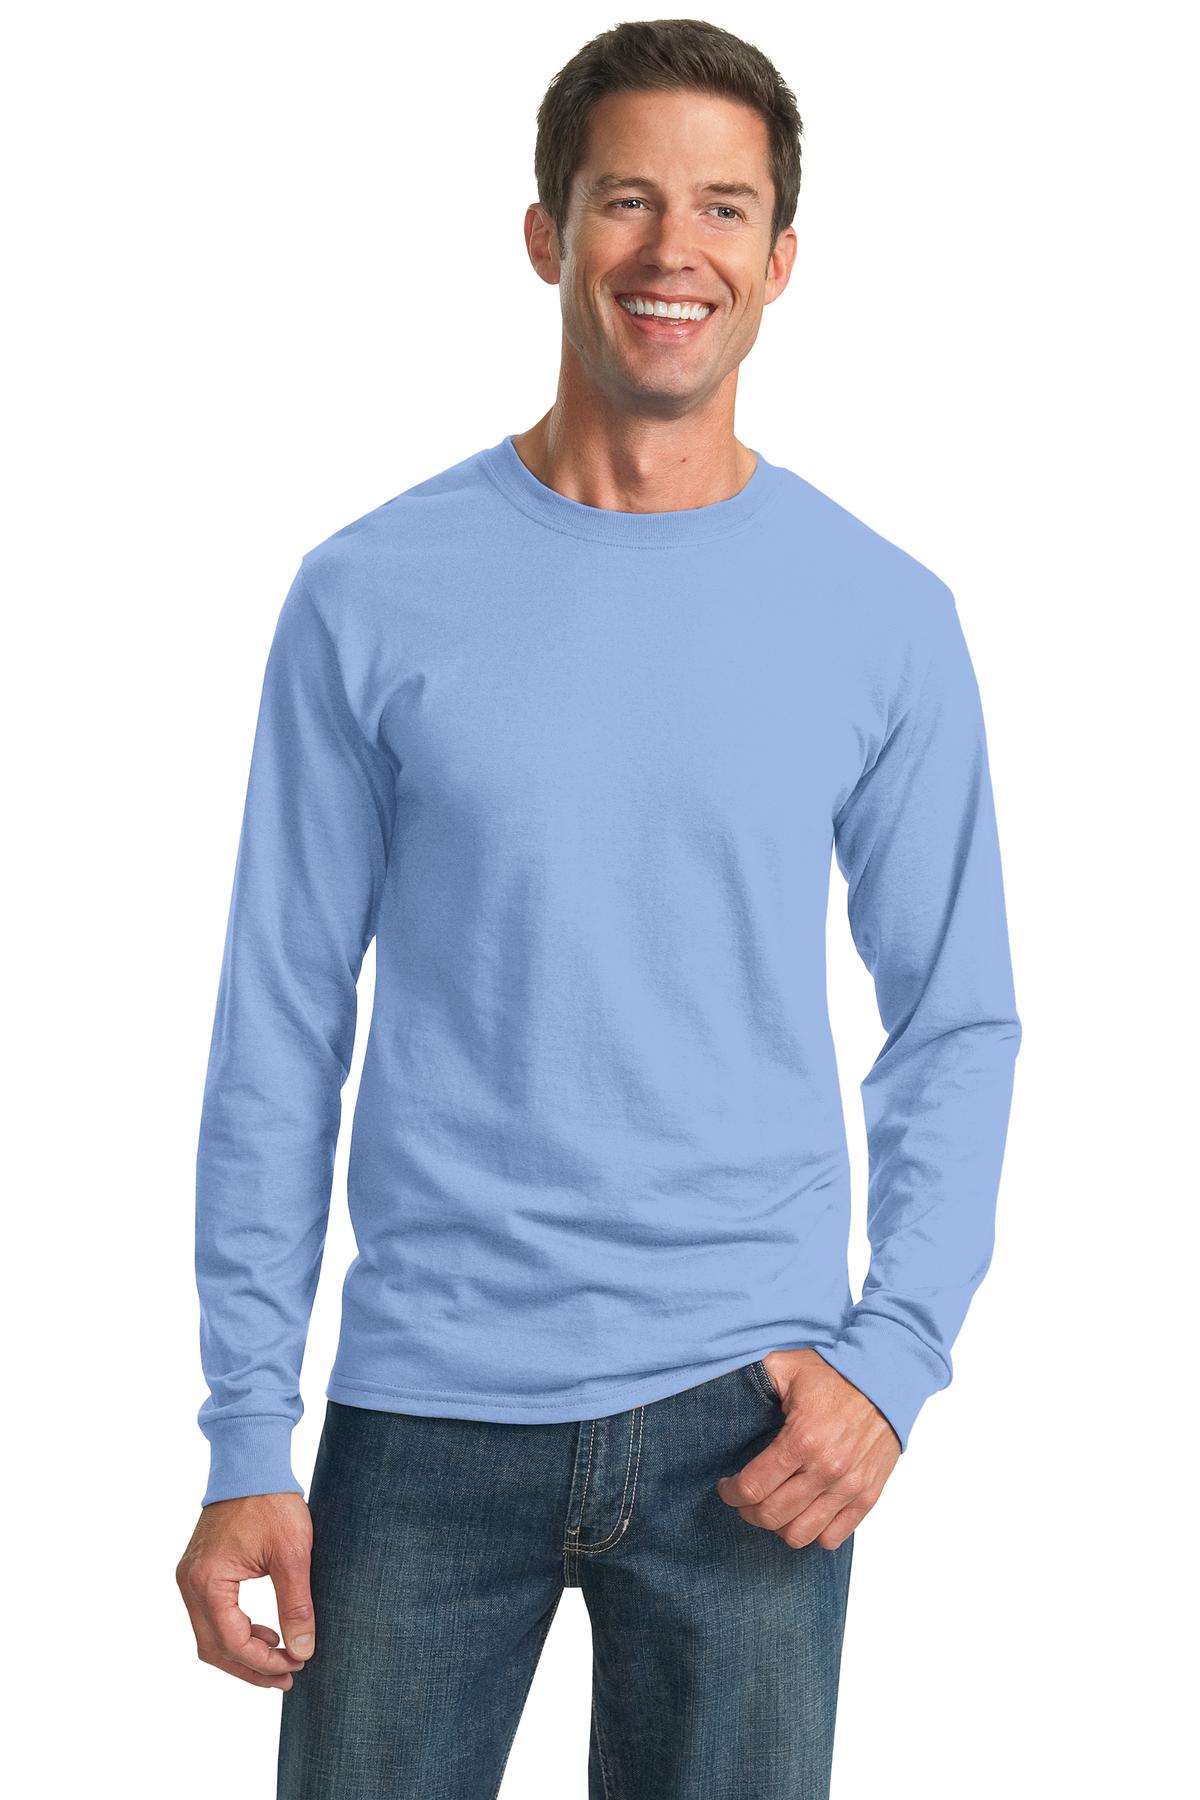 JERZEES® - Dri-Power® 50/50 Cotton/Poly Long Sleeve T-Shirt. 29LS [Light Blue] - DFW Impression